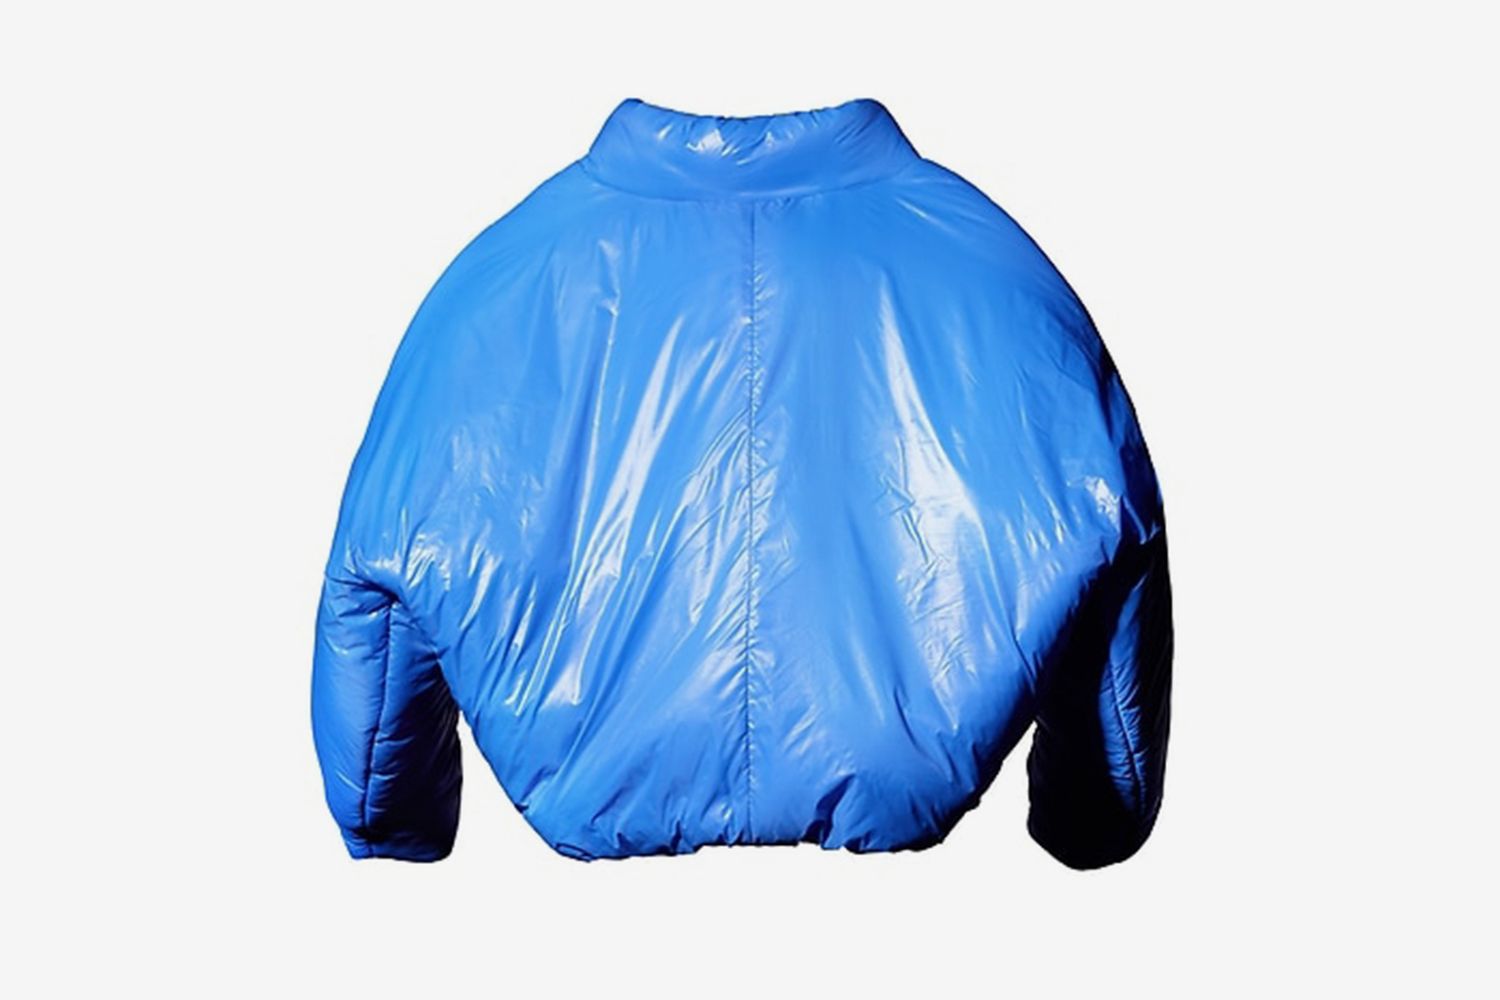 YEEZY Gap Jacket: Four Ways to Style the Bright Blue Piece